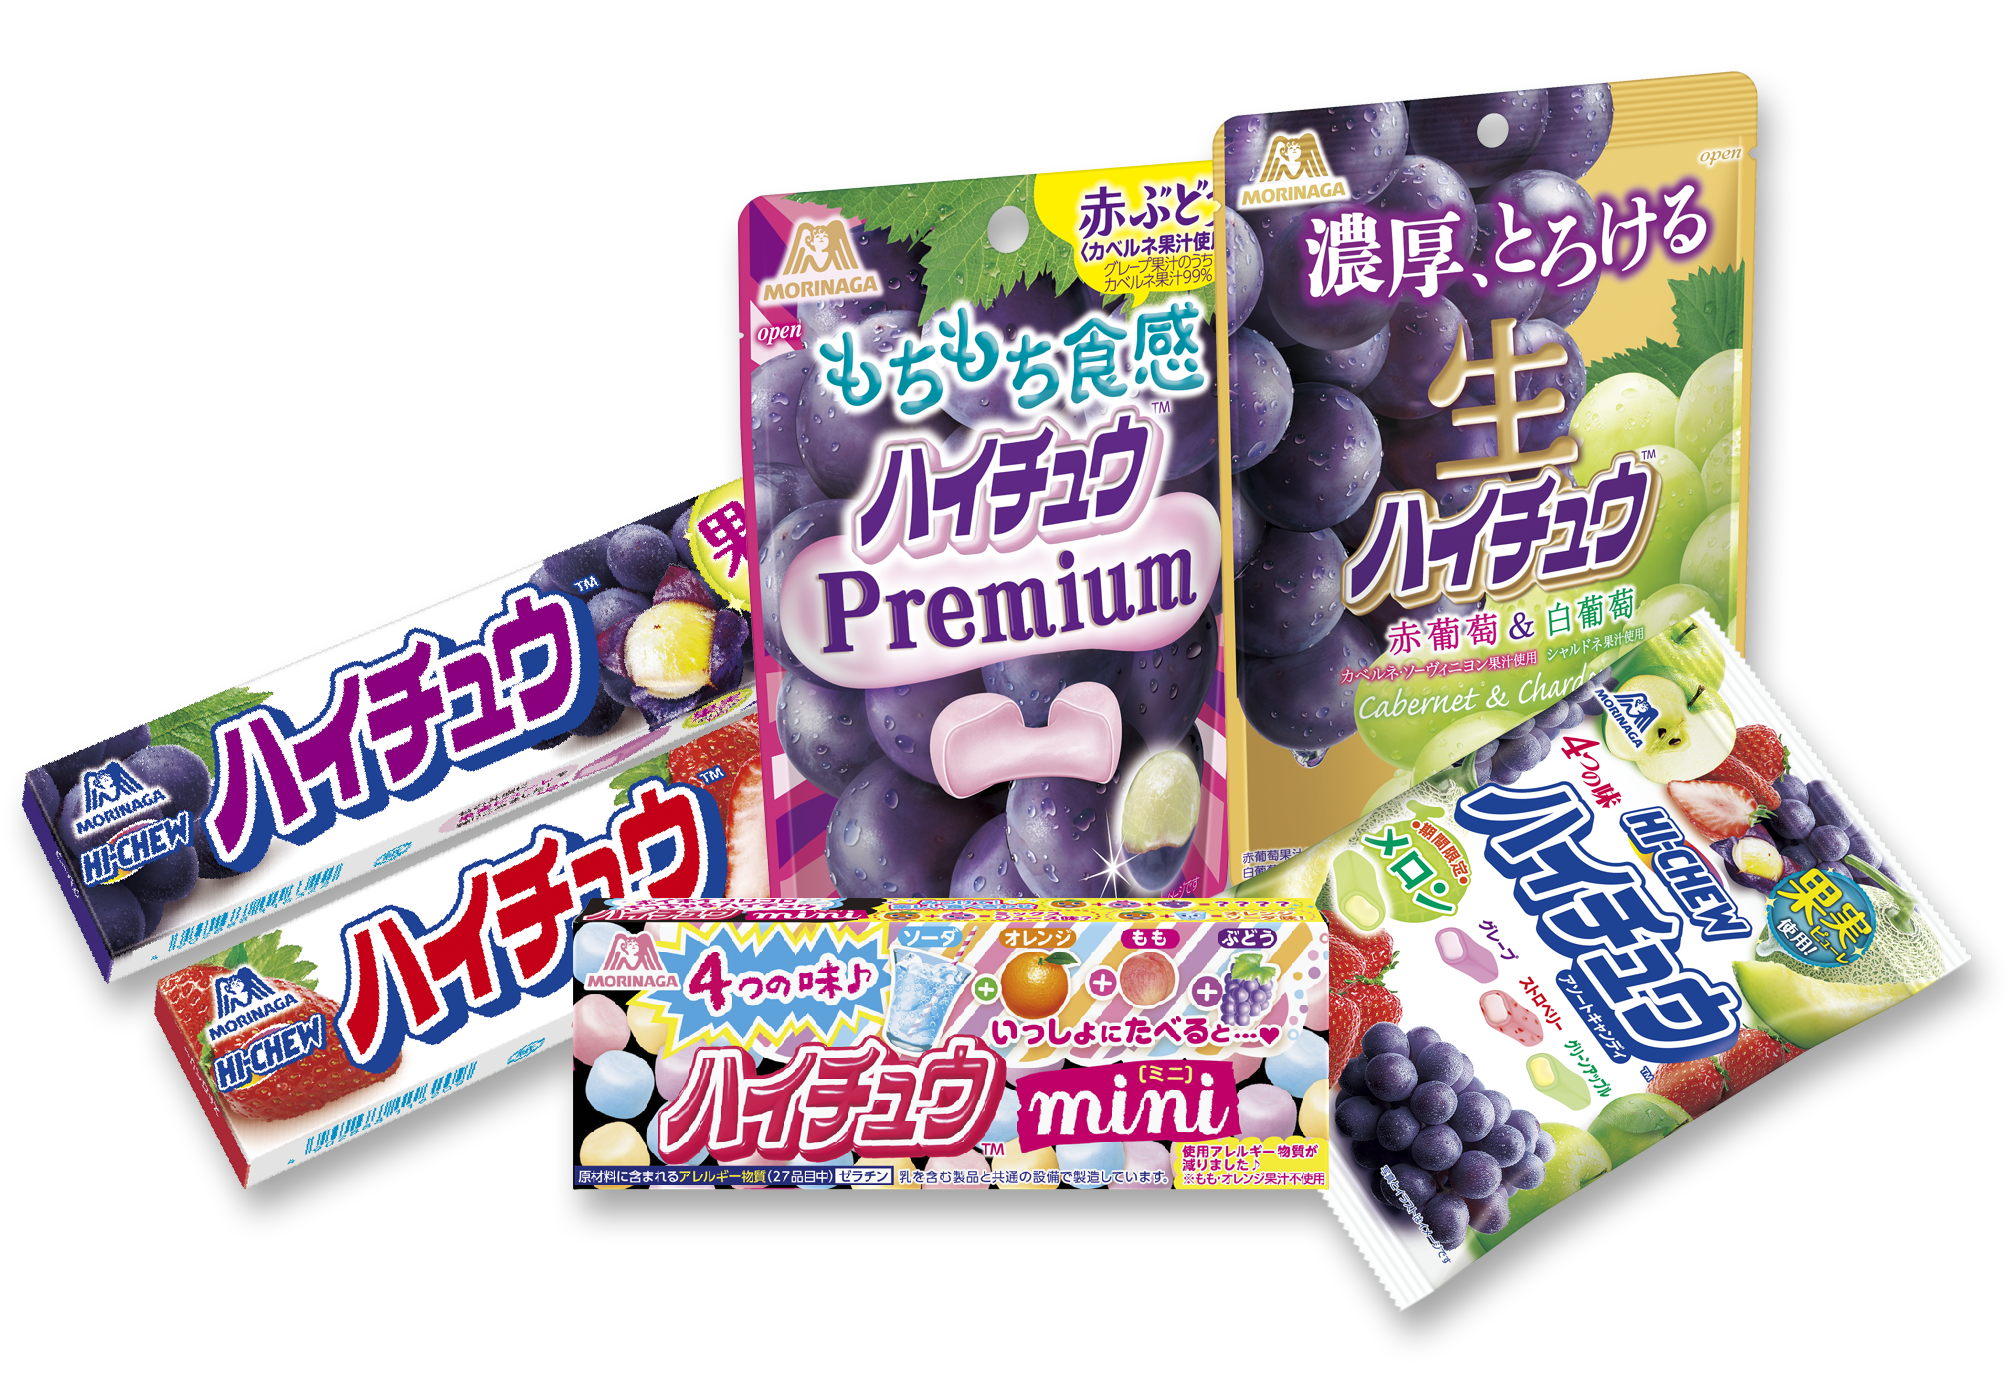 Soft Candy Technology - Morinaga Asia Pacific Co., Ltd.